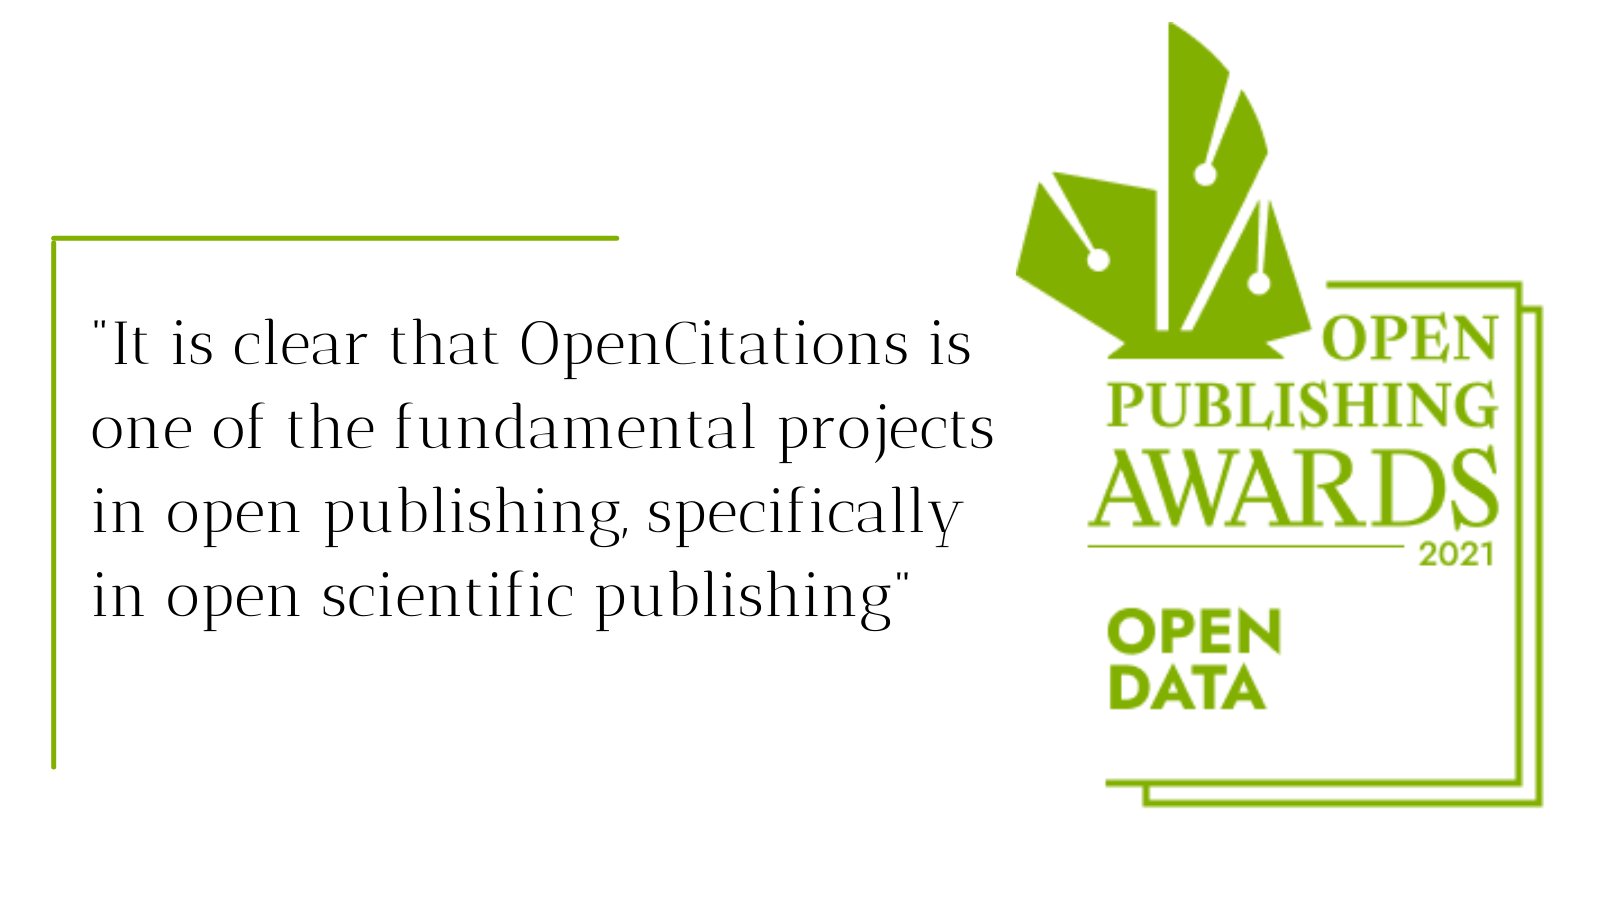 Open Publishing Award 2021 - Open Data